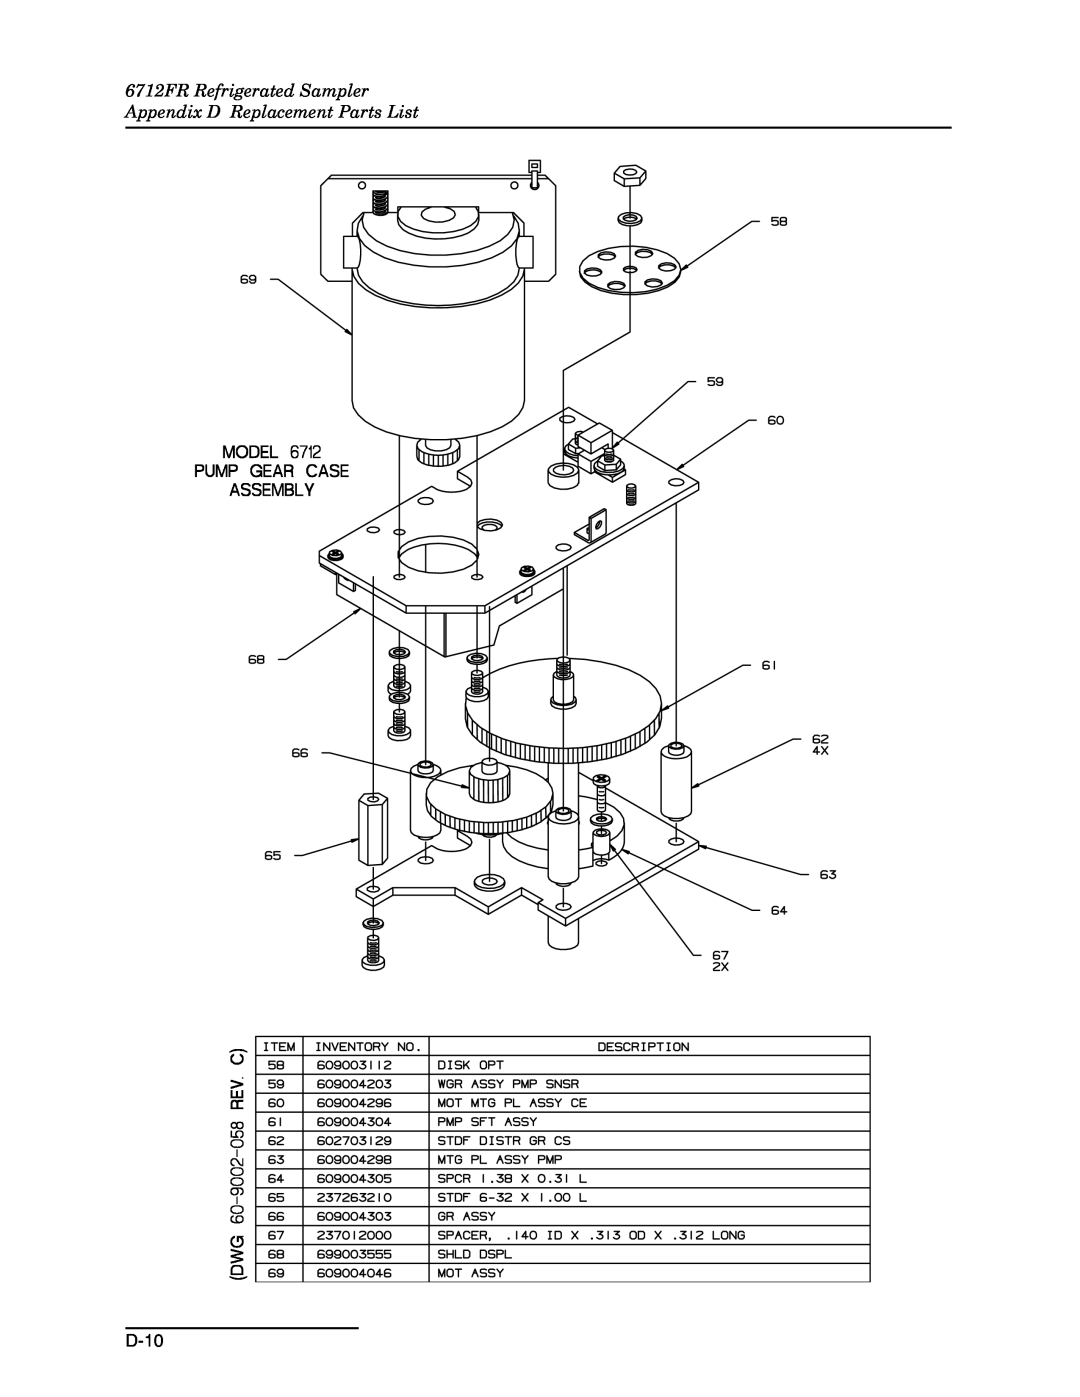 Teledyne manual 6712FR Refrigerated Sampler Appendix D Replacement Parts List, D-10 